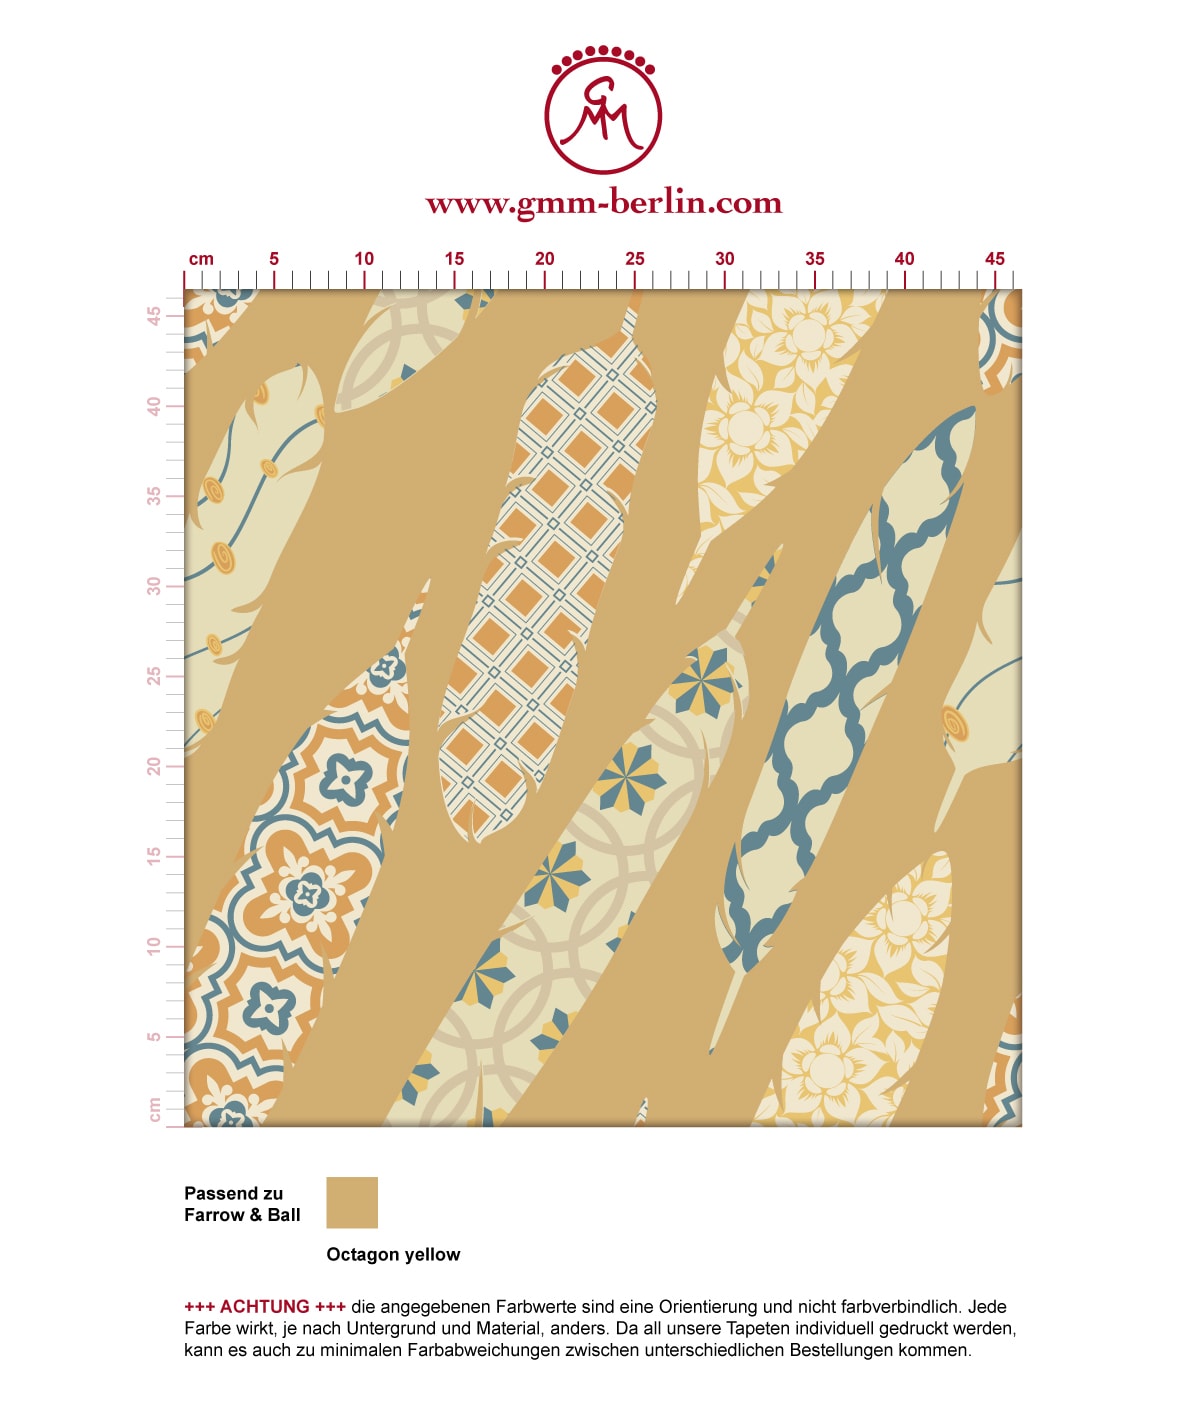 Gelbe moderne Tapete "Fancy Feathers" mit dekorativem Feder Muster angepasst an Farrow and Ball Wandfarben. Aus dem GMM-BERLIN.com Sortiment: Schöne Tapeten in creme Farbe